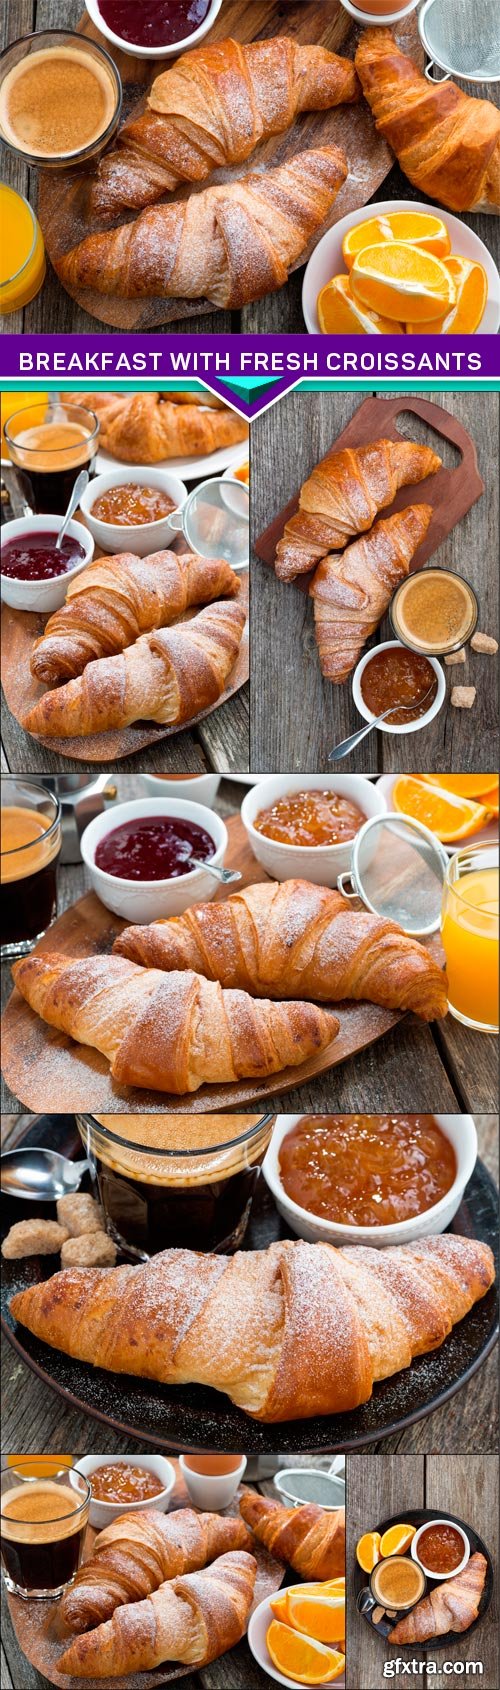 Breakfast with fresh croissants 7x JPEG